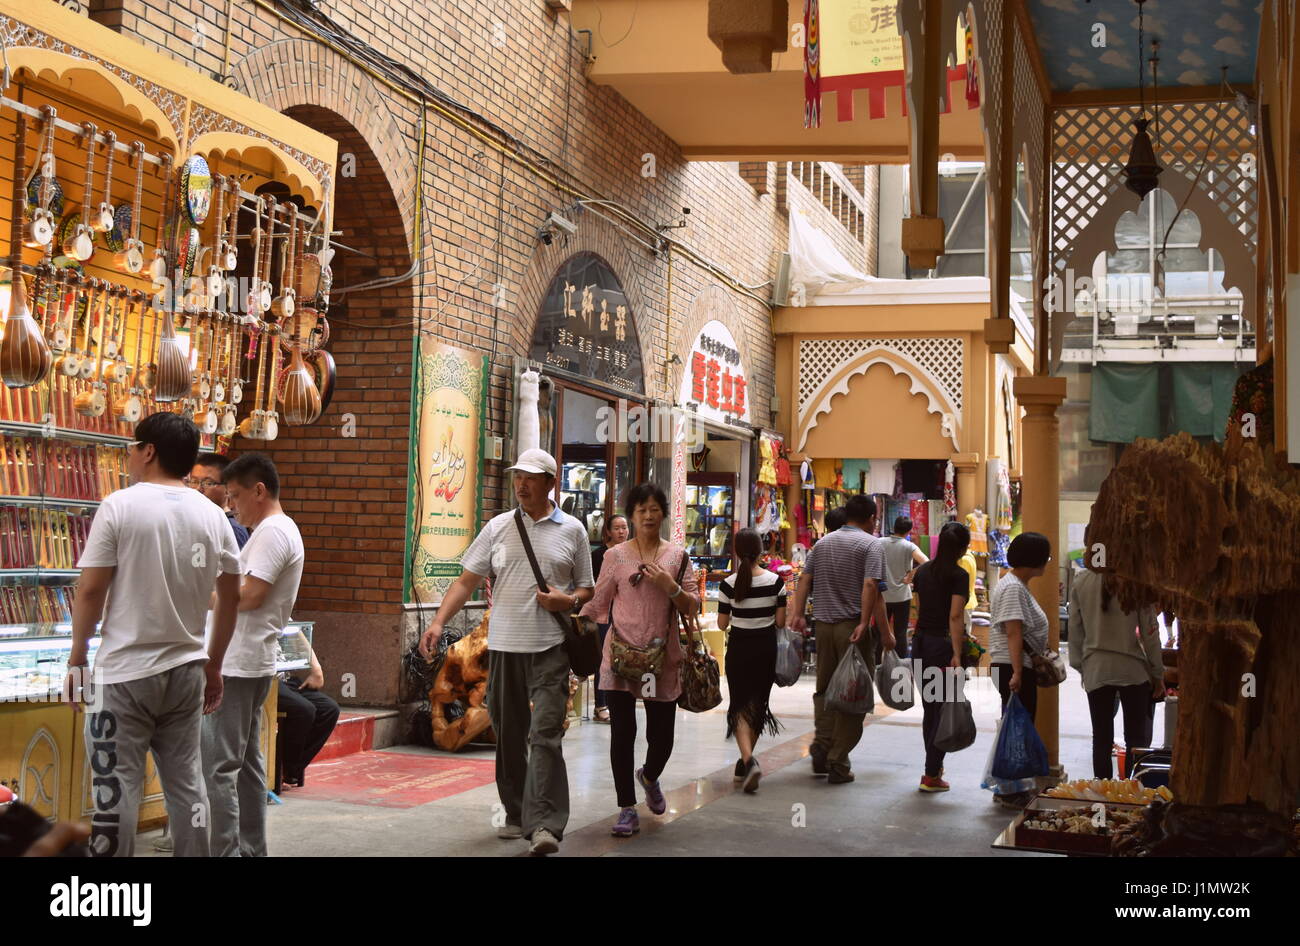 Islamic architecture and alleys of Muslim bazar market of Urumqi, Xinjiang, China Stock Photo